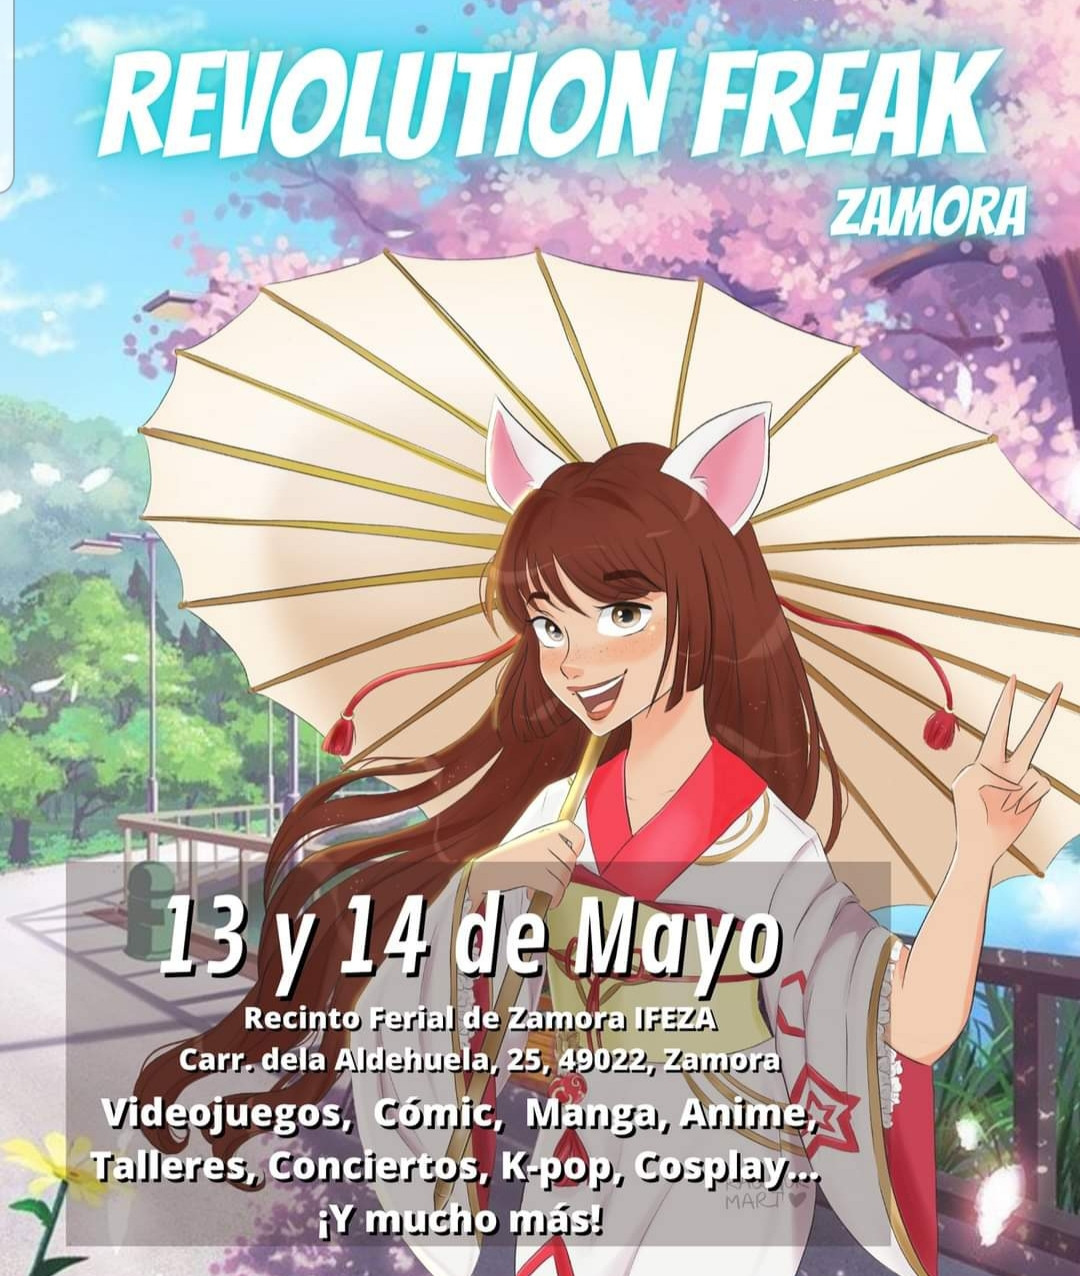 Revolution Freak Zamora